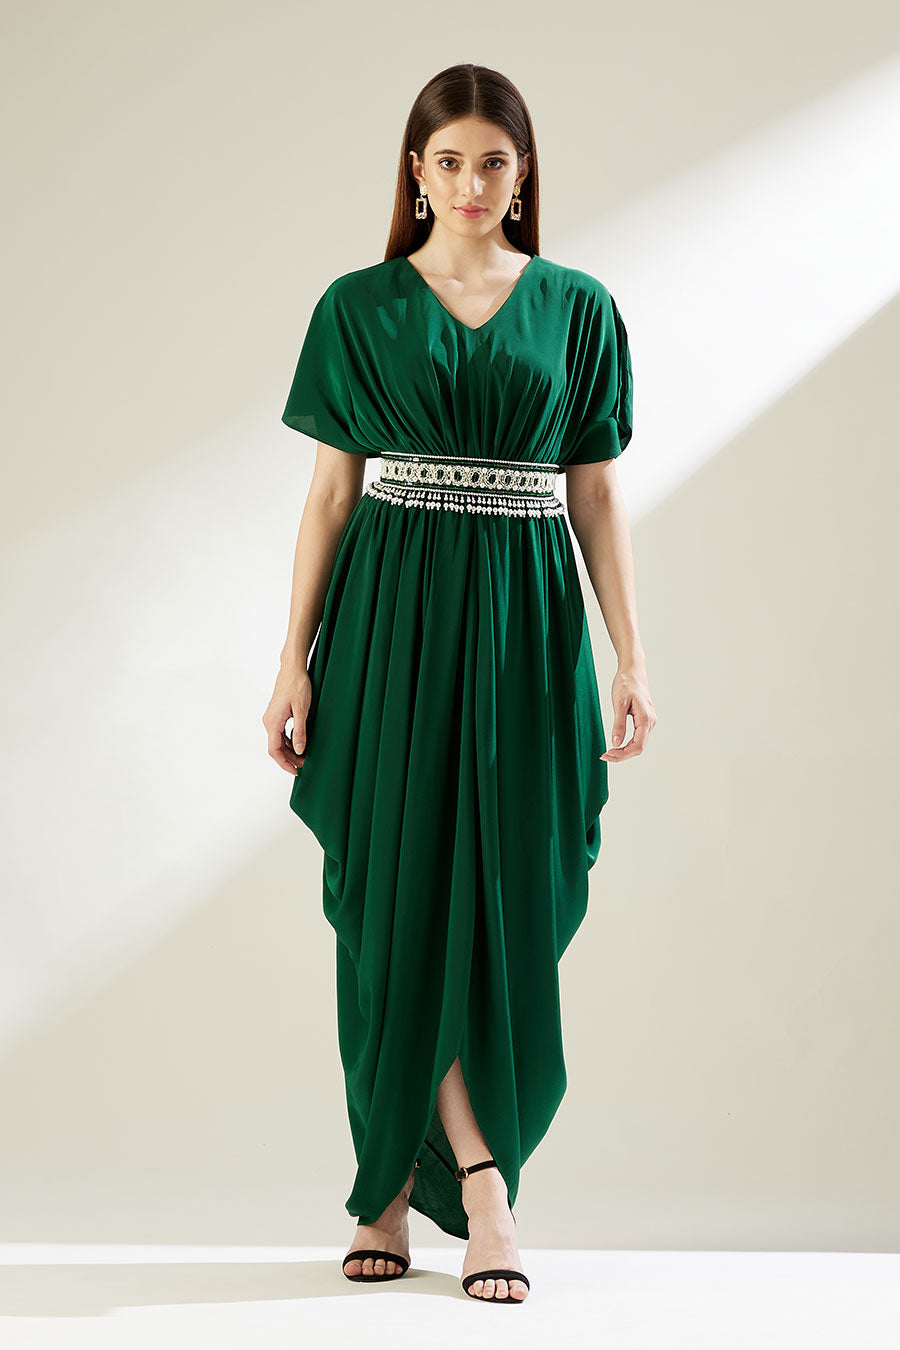 Shop Designer Drape & Fusion Dresses for Women - House of Designers – Page  3 – HOUSE OF DESIGNERS